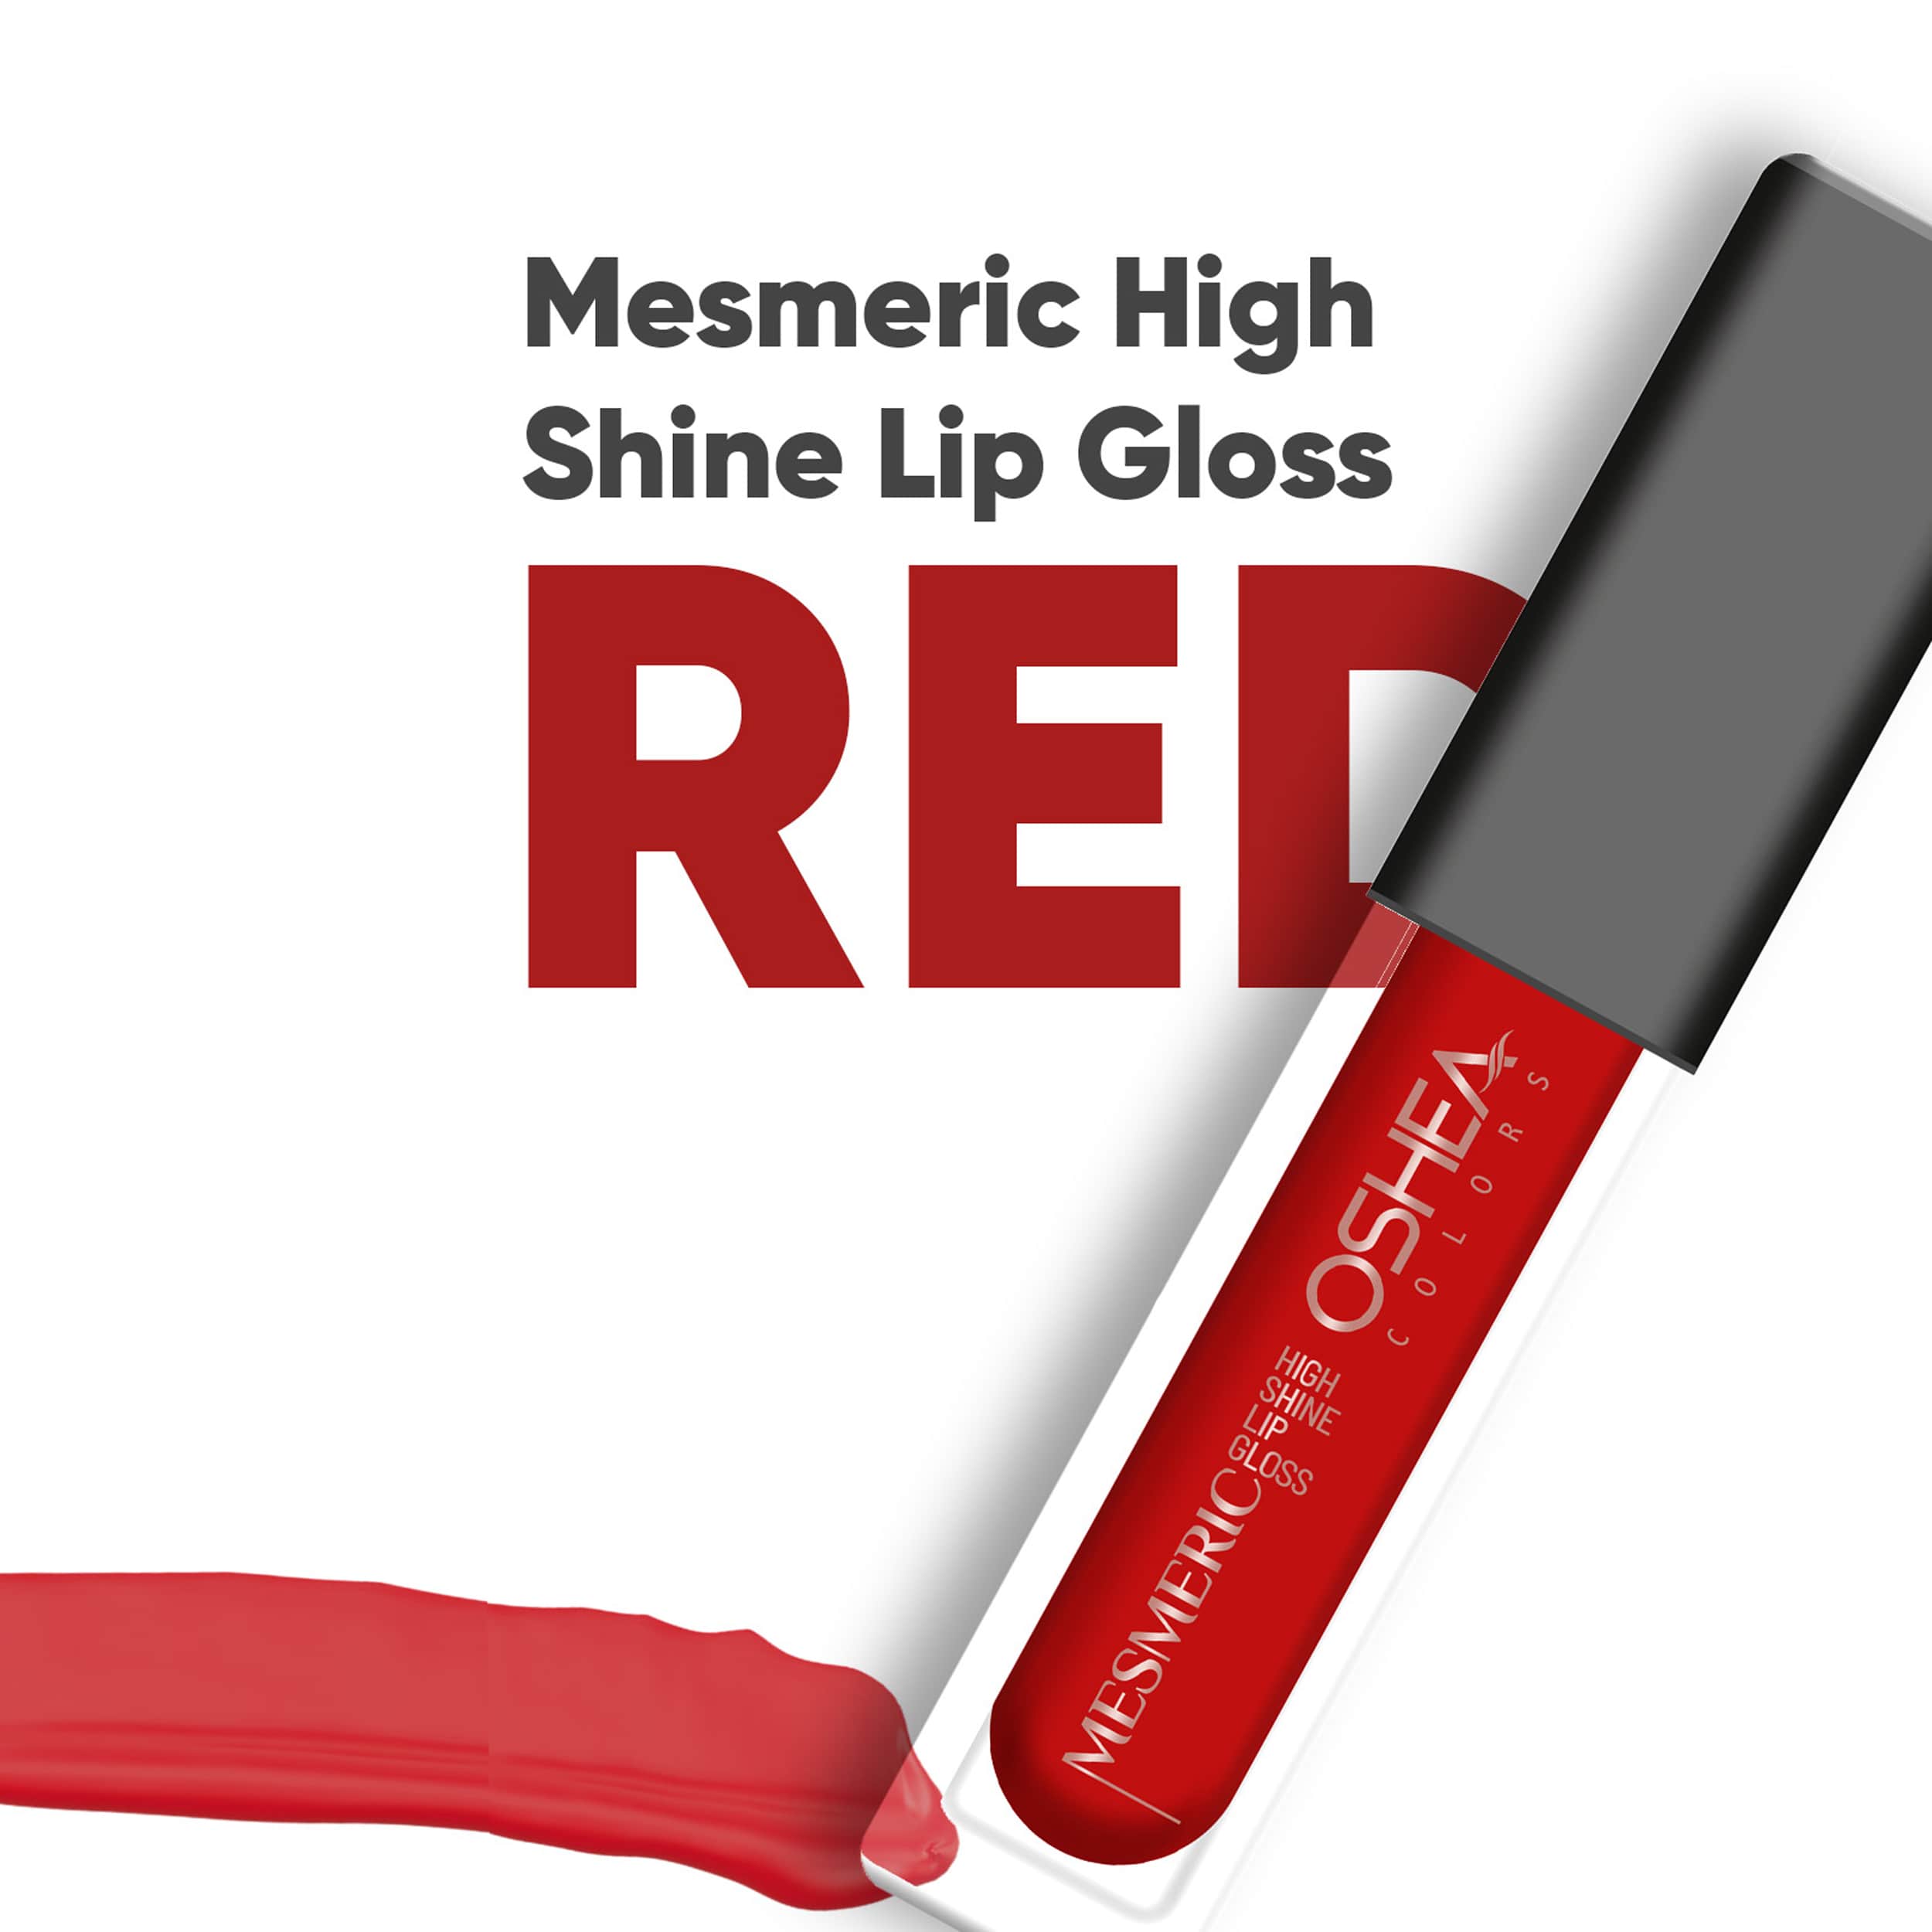 Mesmeric High Shine Lip Gloss